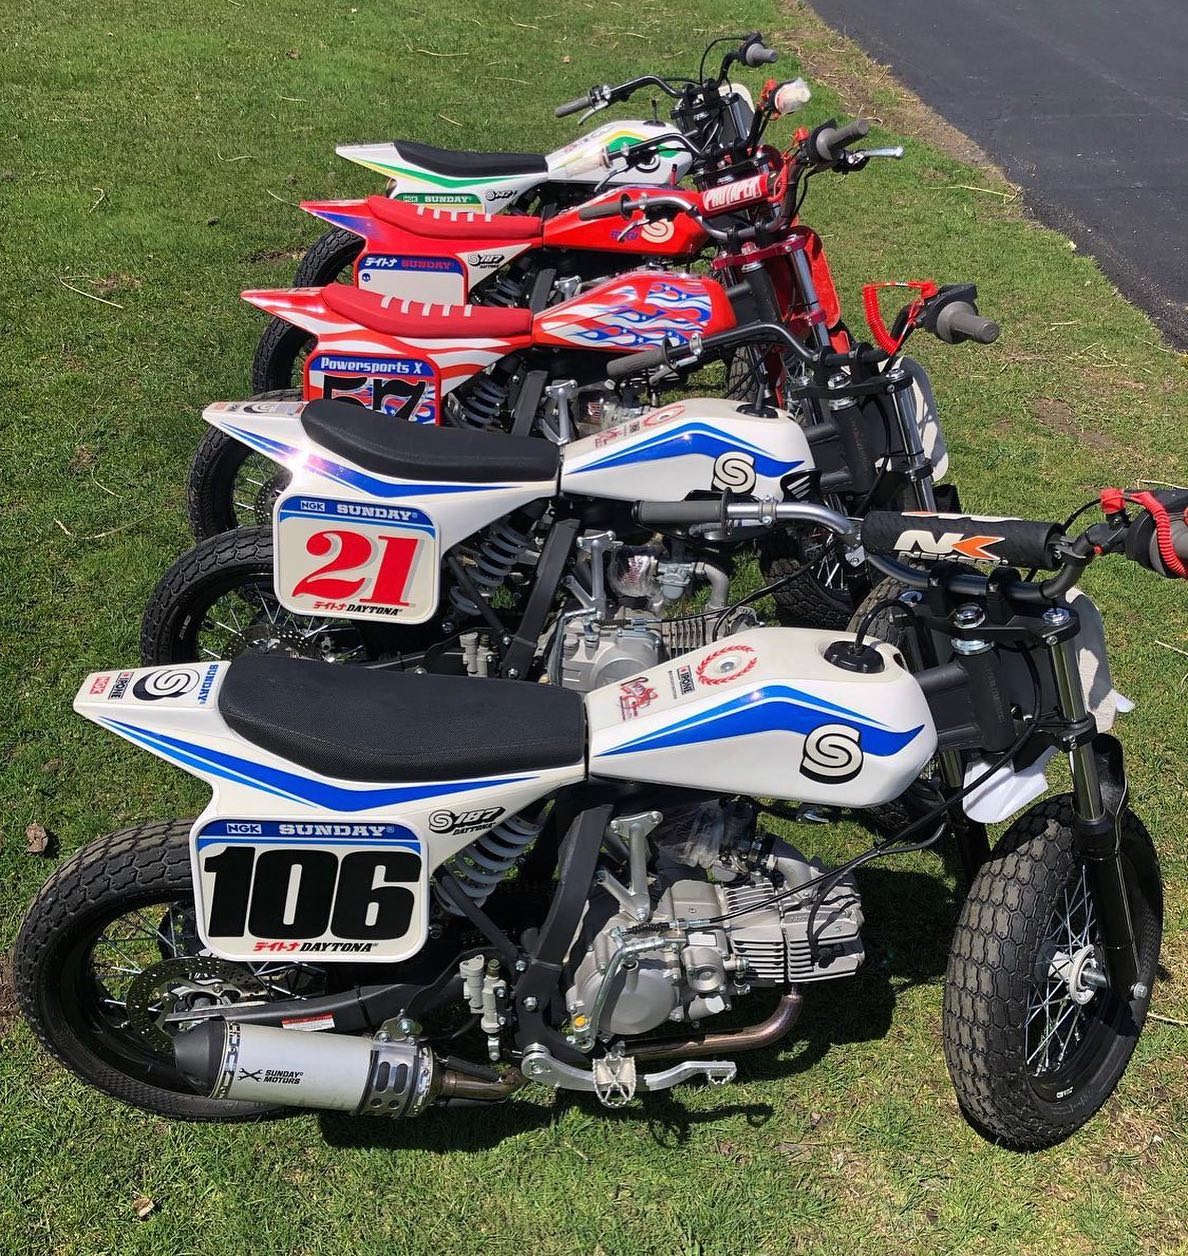 They are ready for a good Sunday! 🤩
@powersportsx
—
#sundaymotors #flattrack #ycf #moto #motorcycle